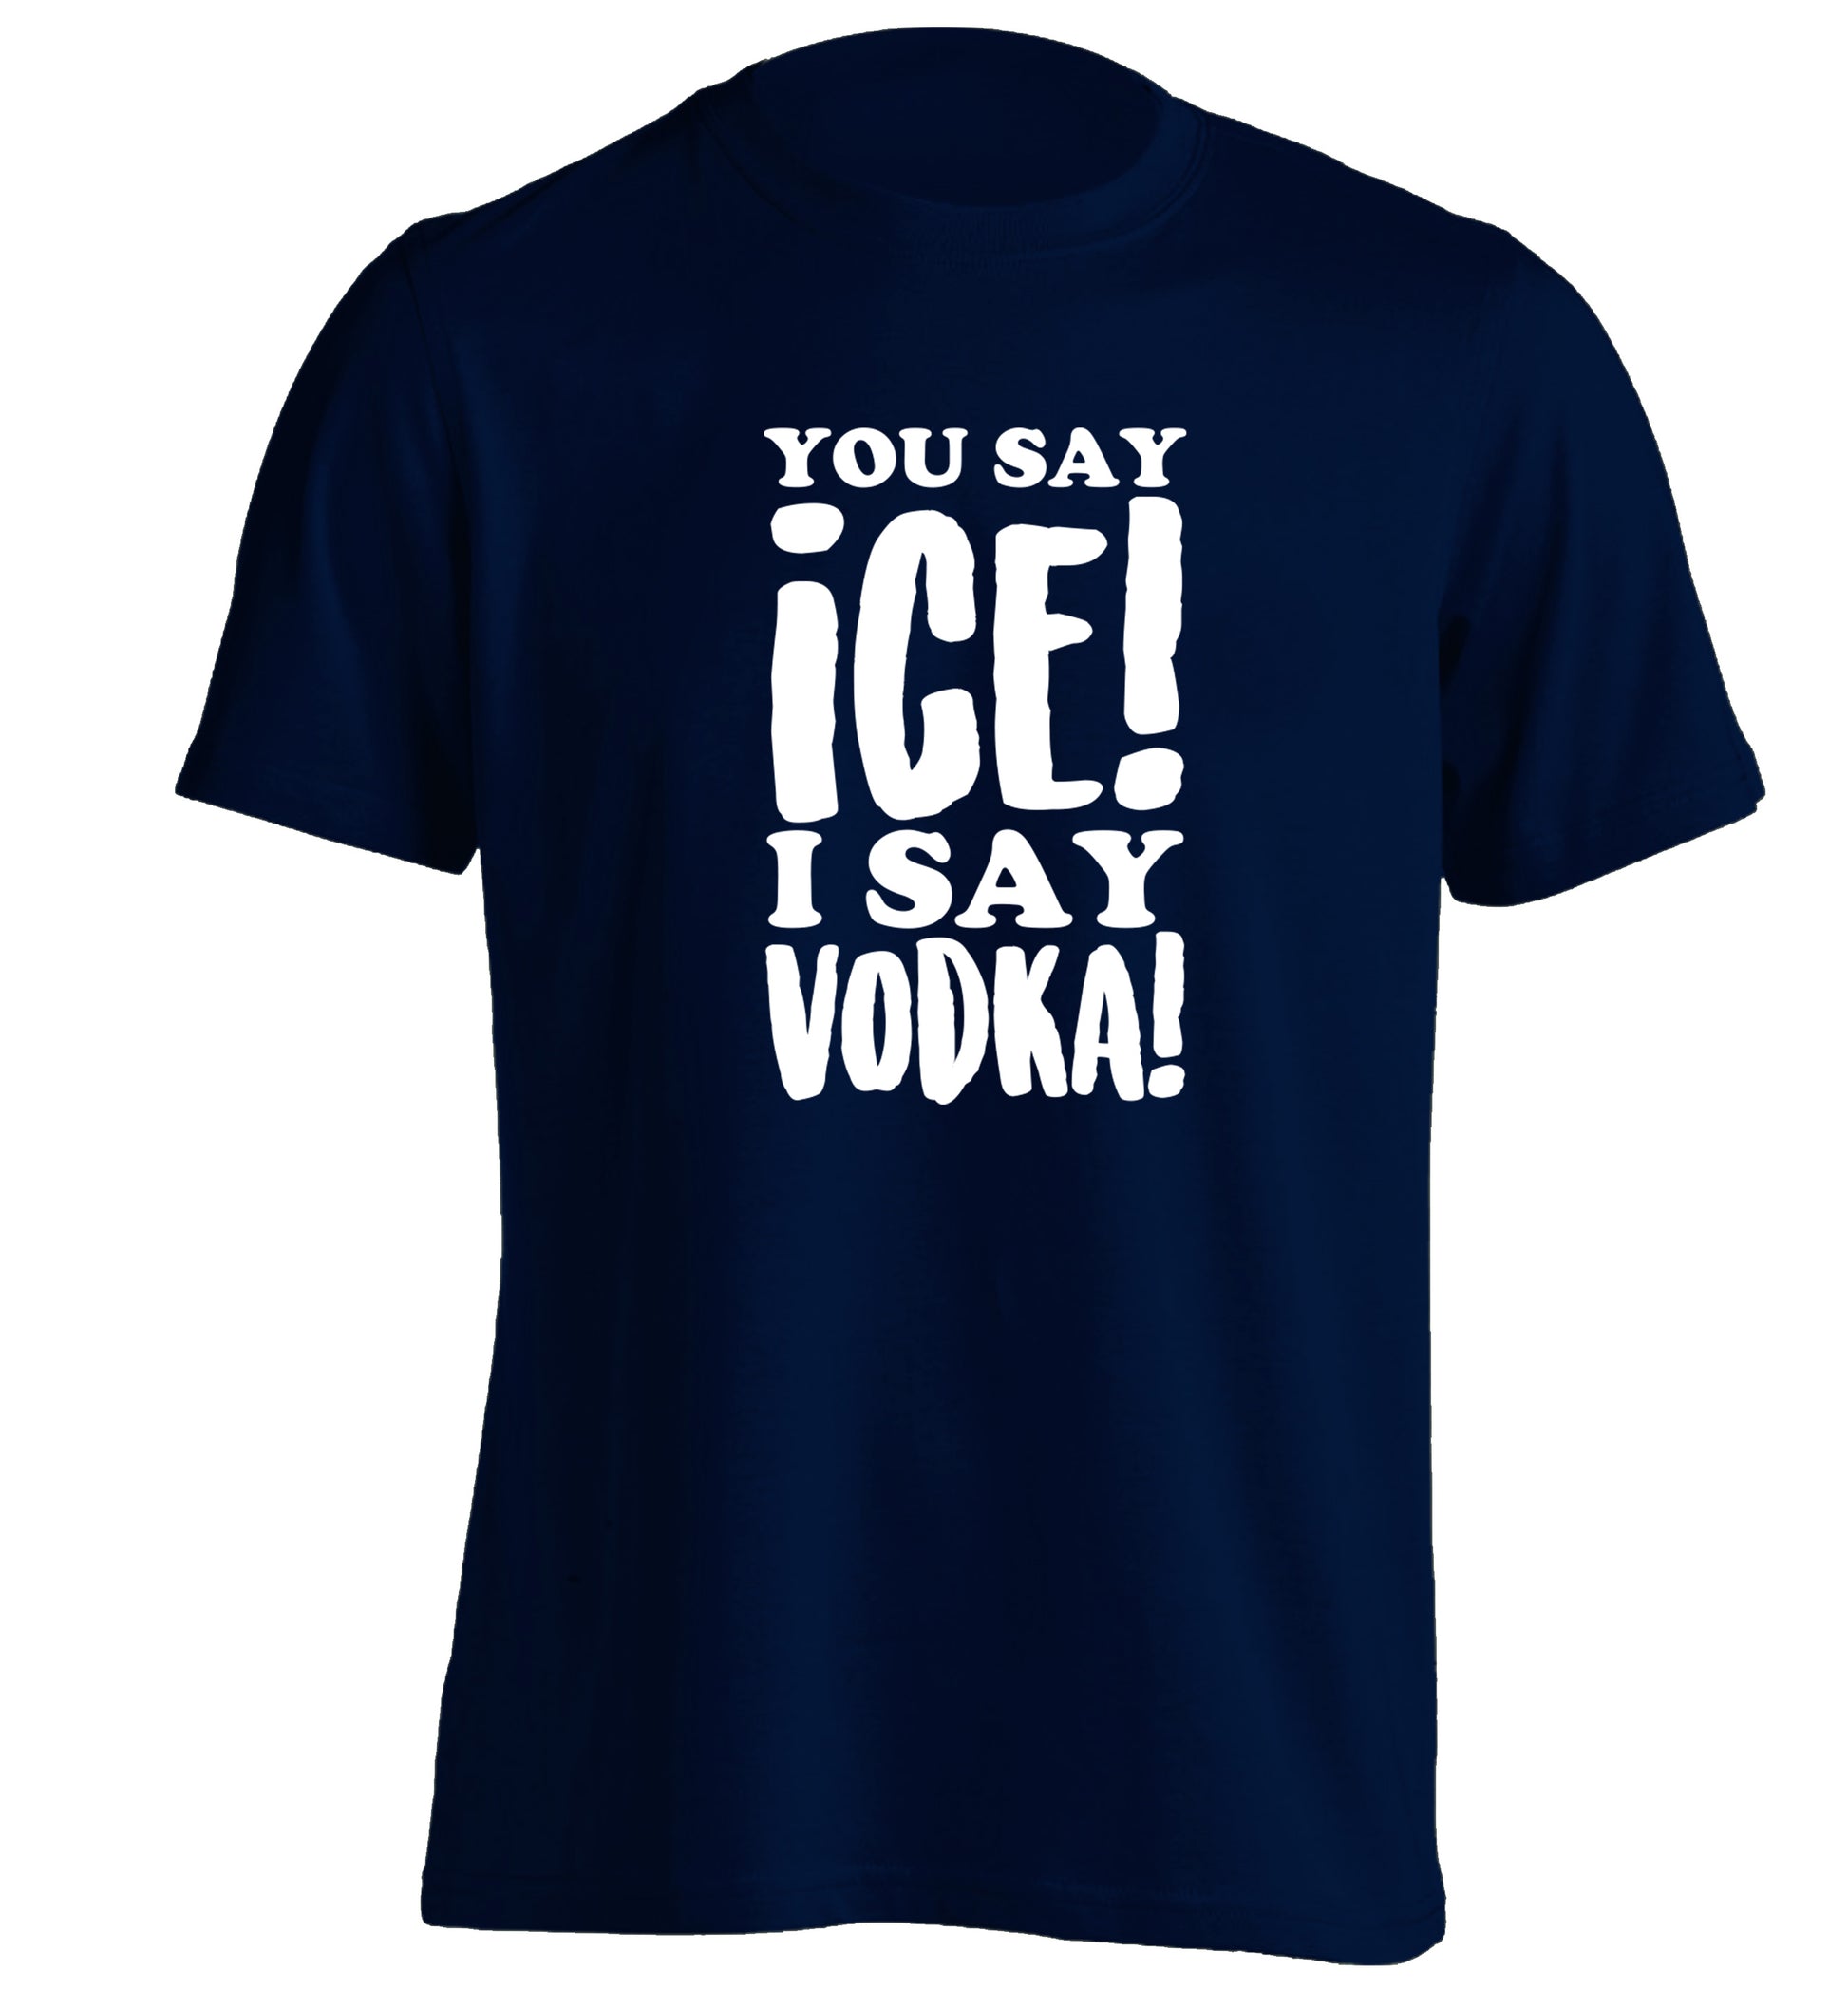 You say ice I say vodka! adults unisex navy Tshirt 2XL